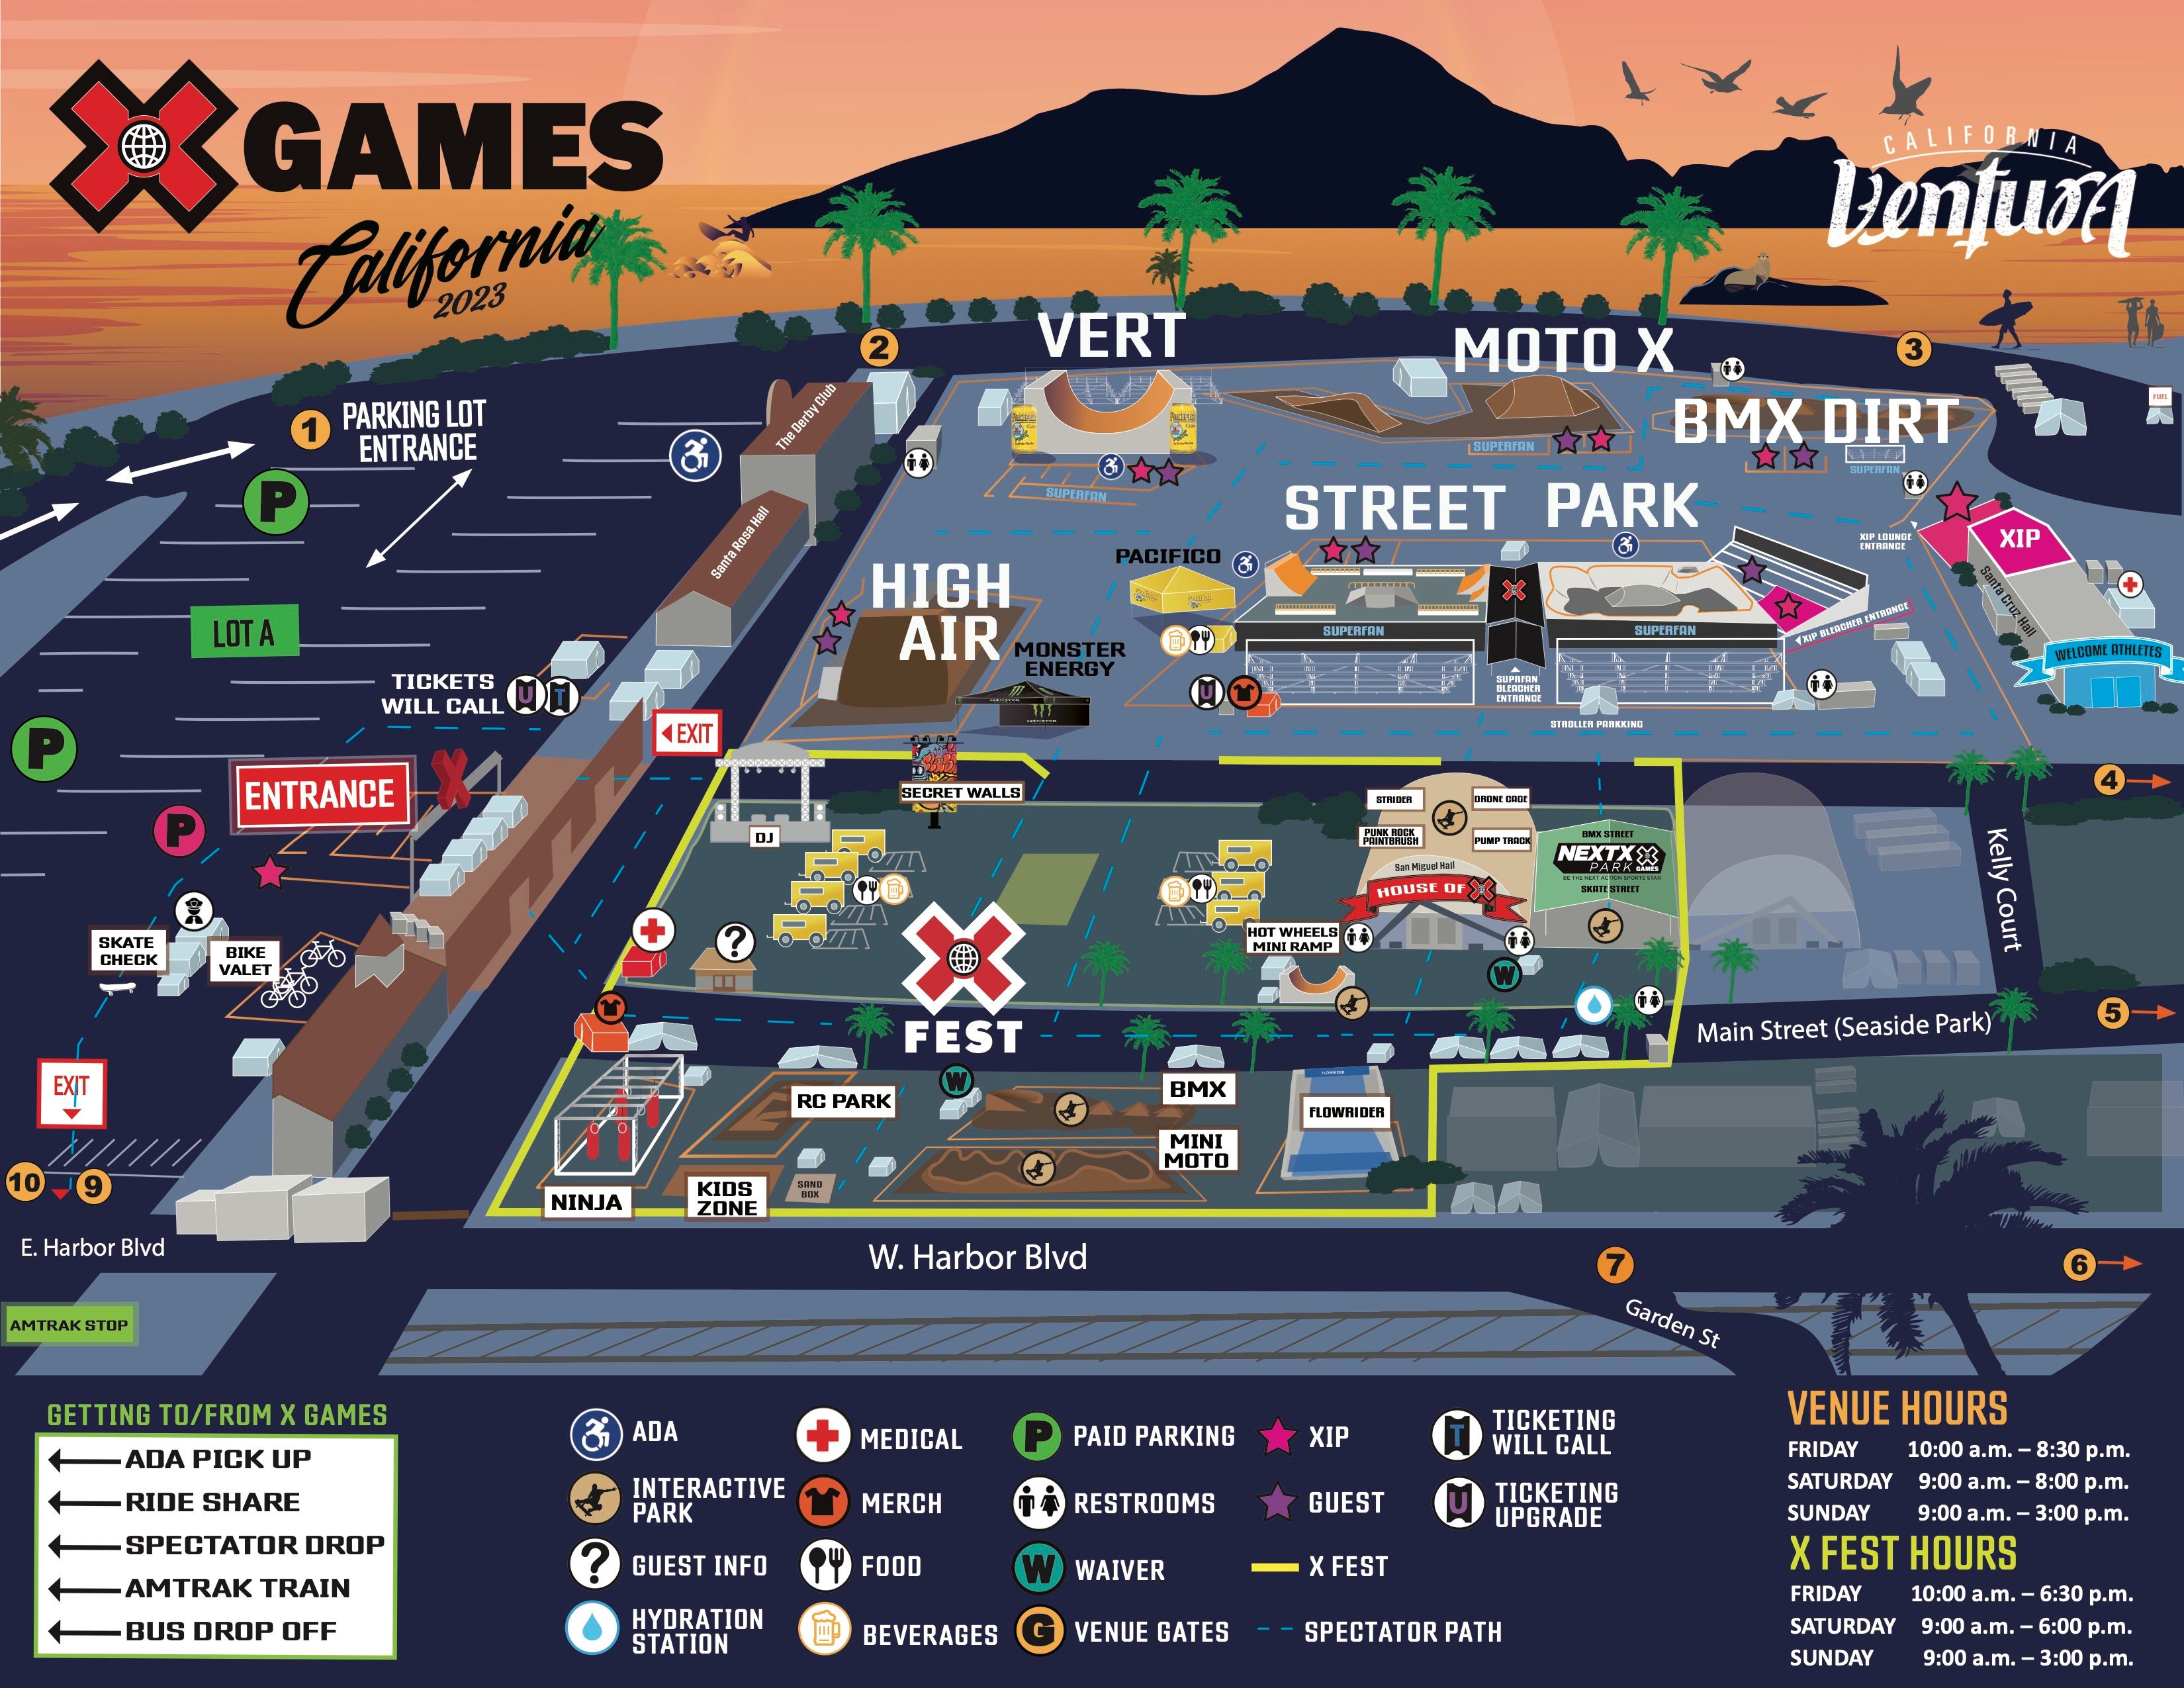 X Games California 2023 Venue Map